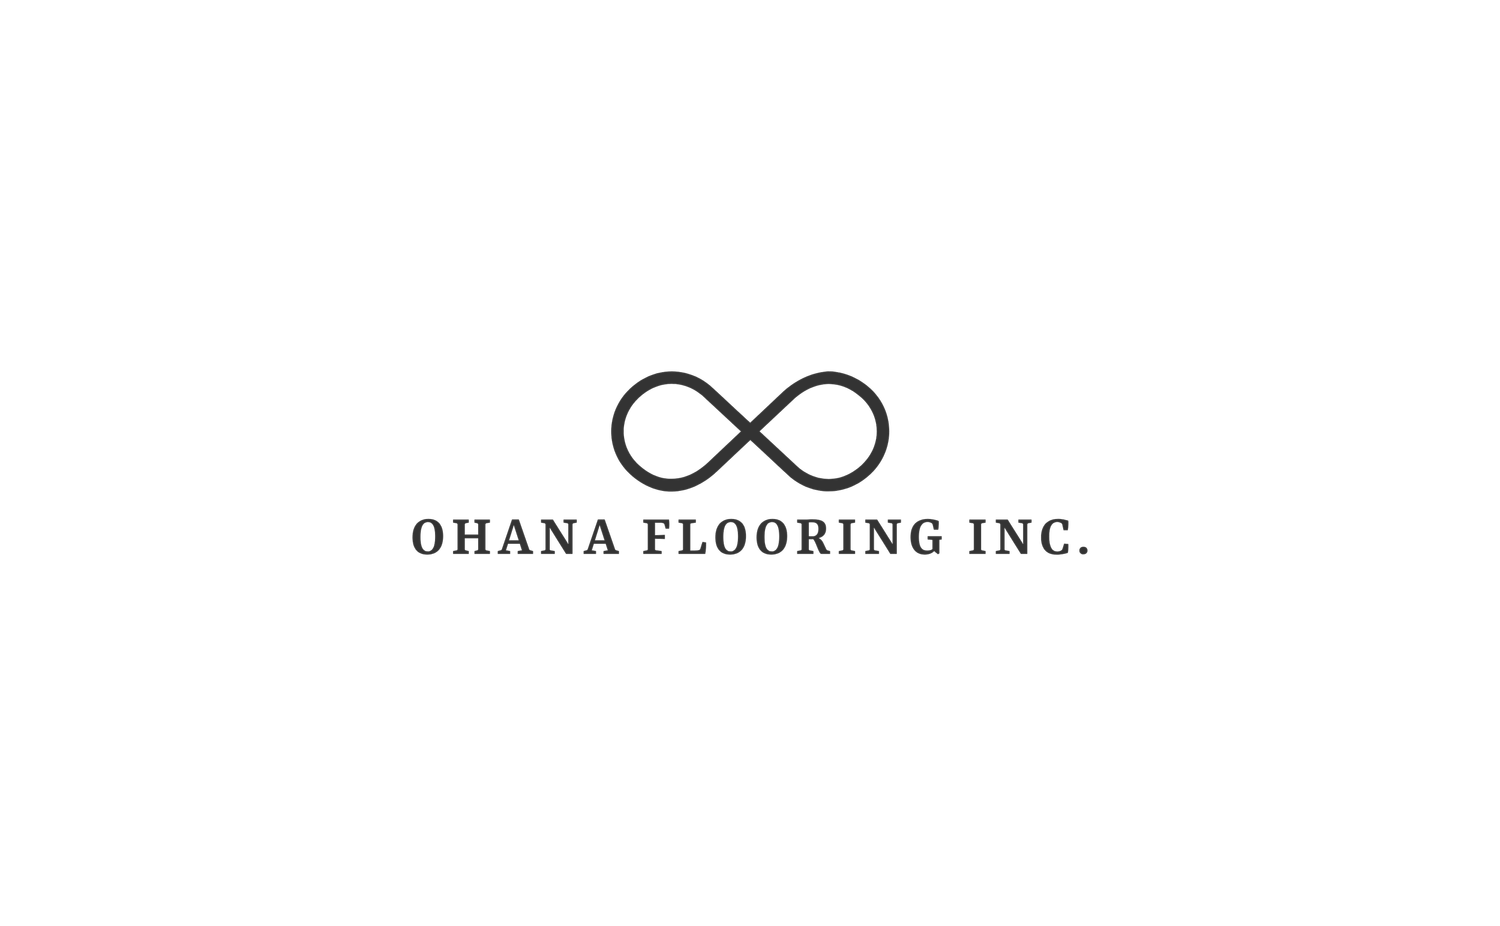 Ohana Flooring Inc.